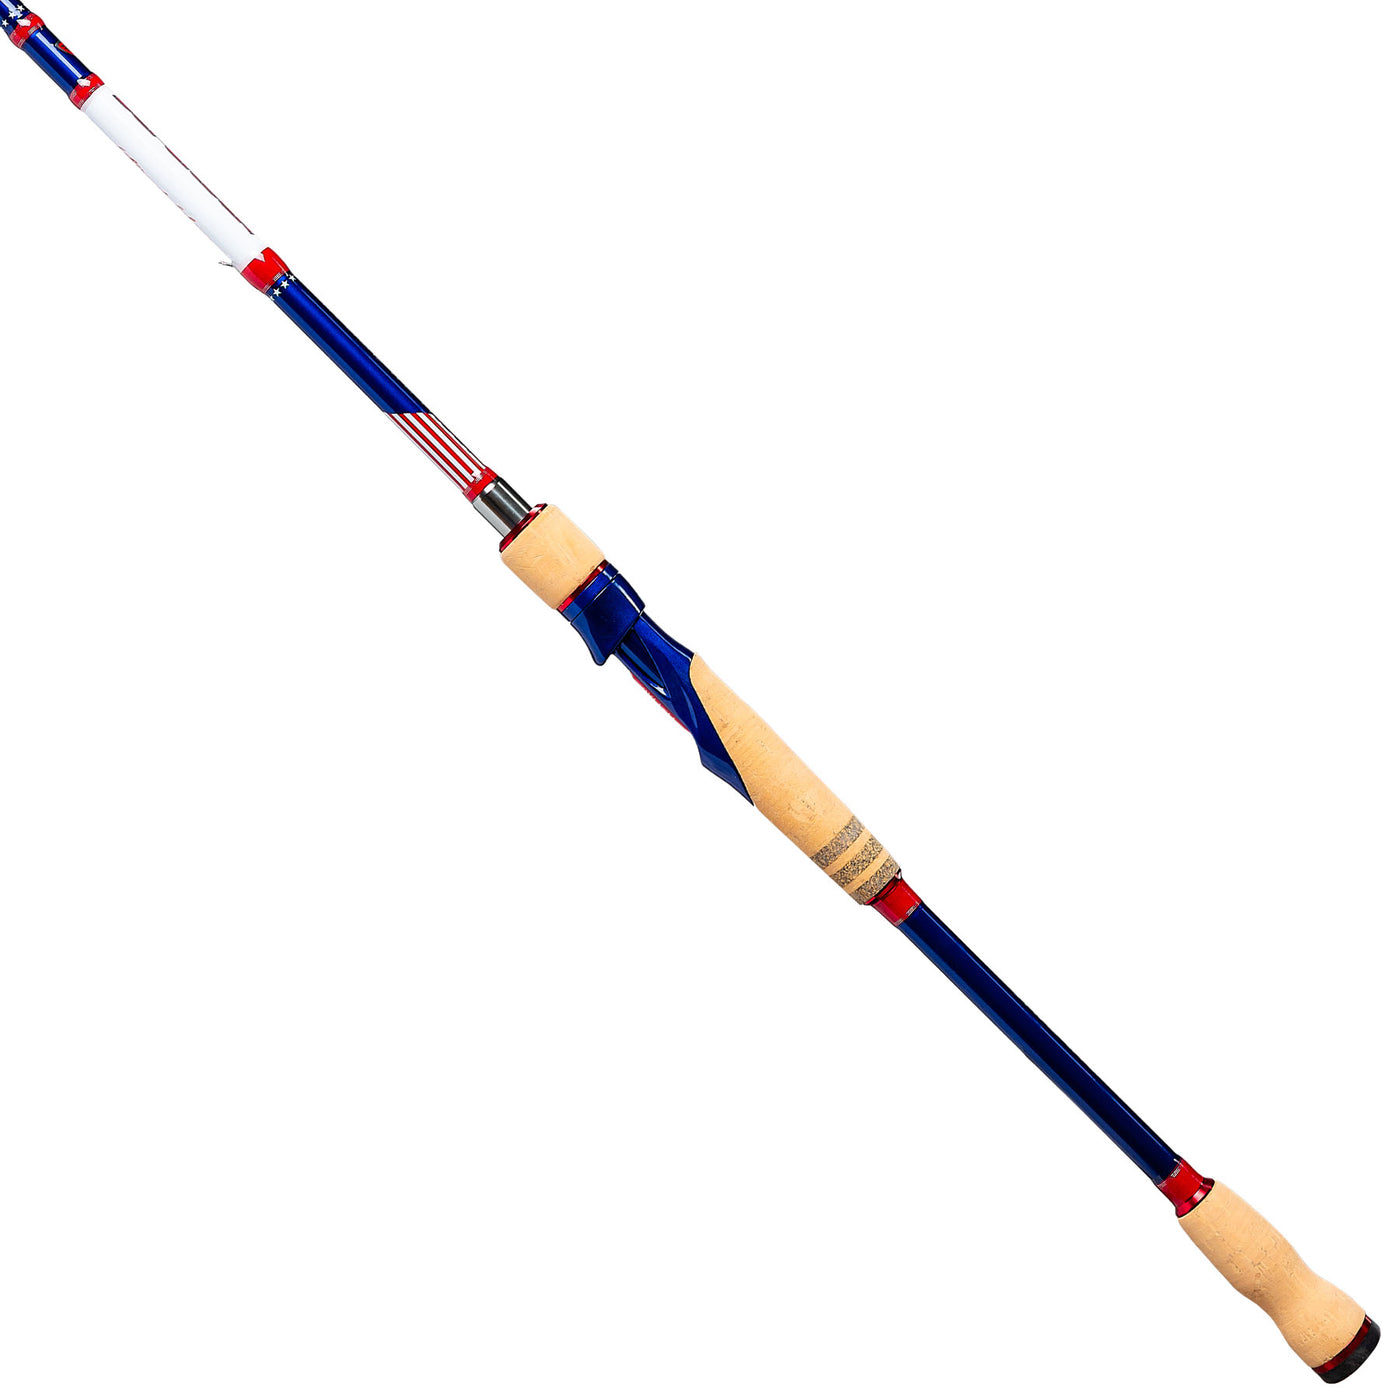  Favorite Fishing USA- Defender Spinning Rod, 7'0 Medium Heavy  2 piece : Sports & Outdoors